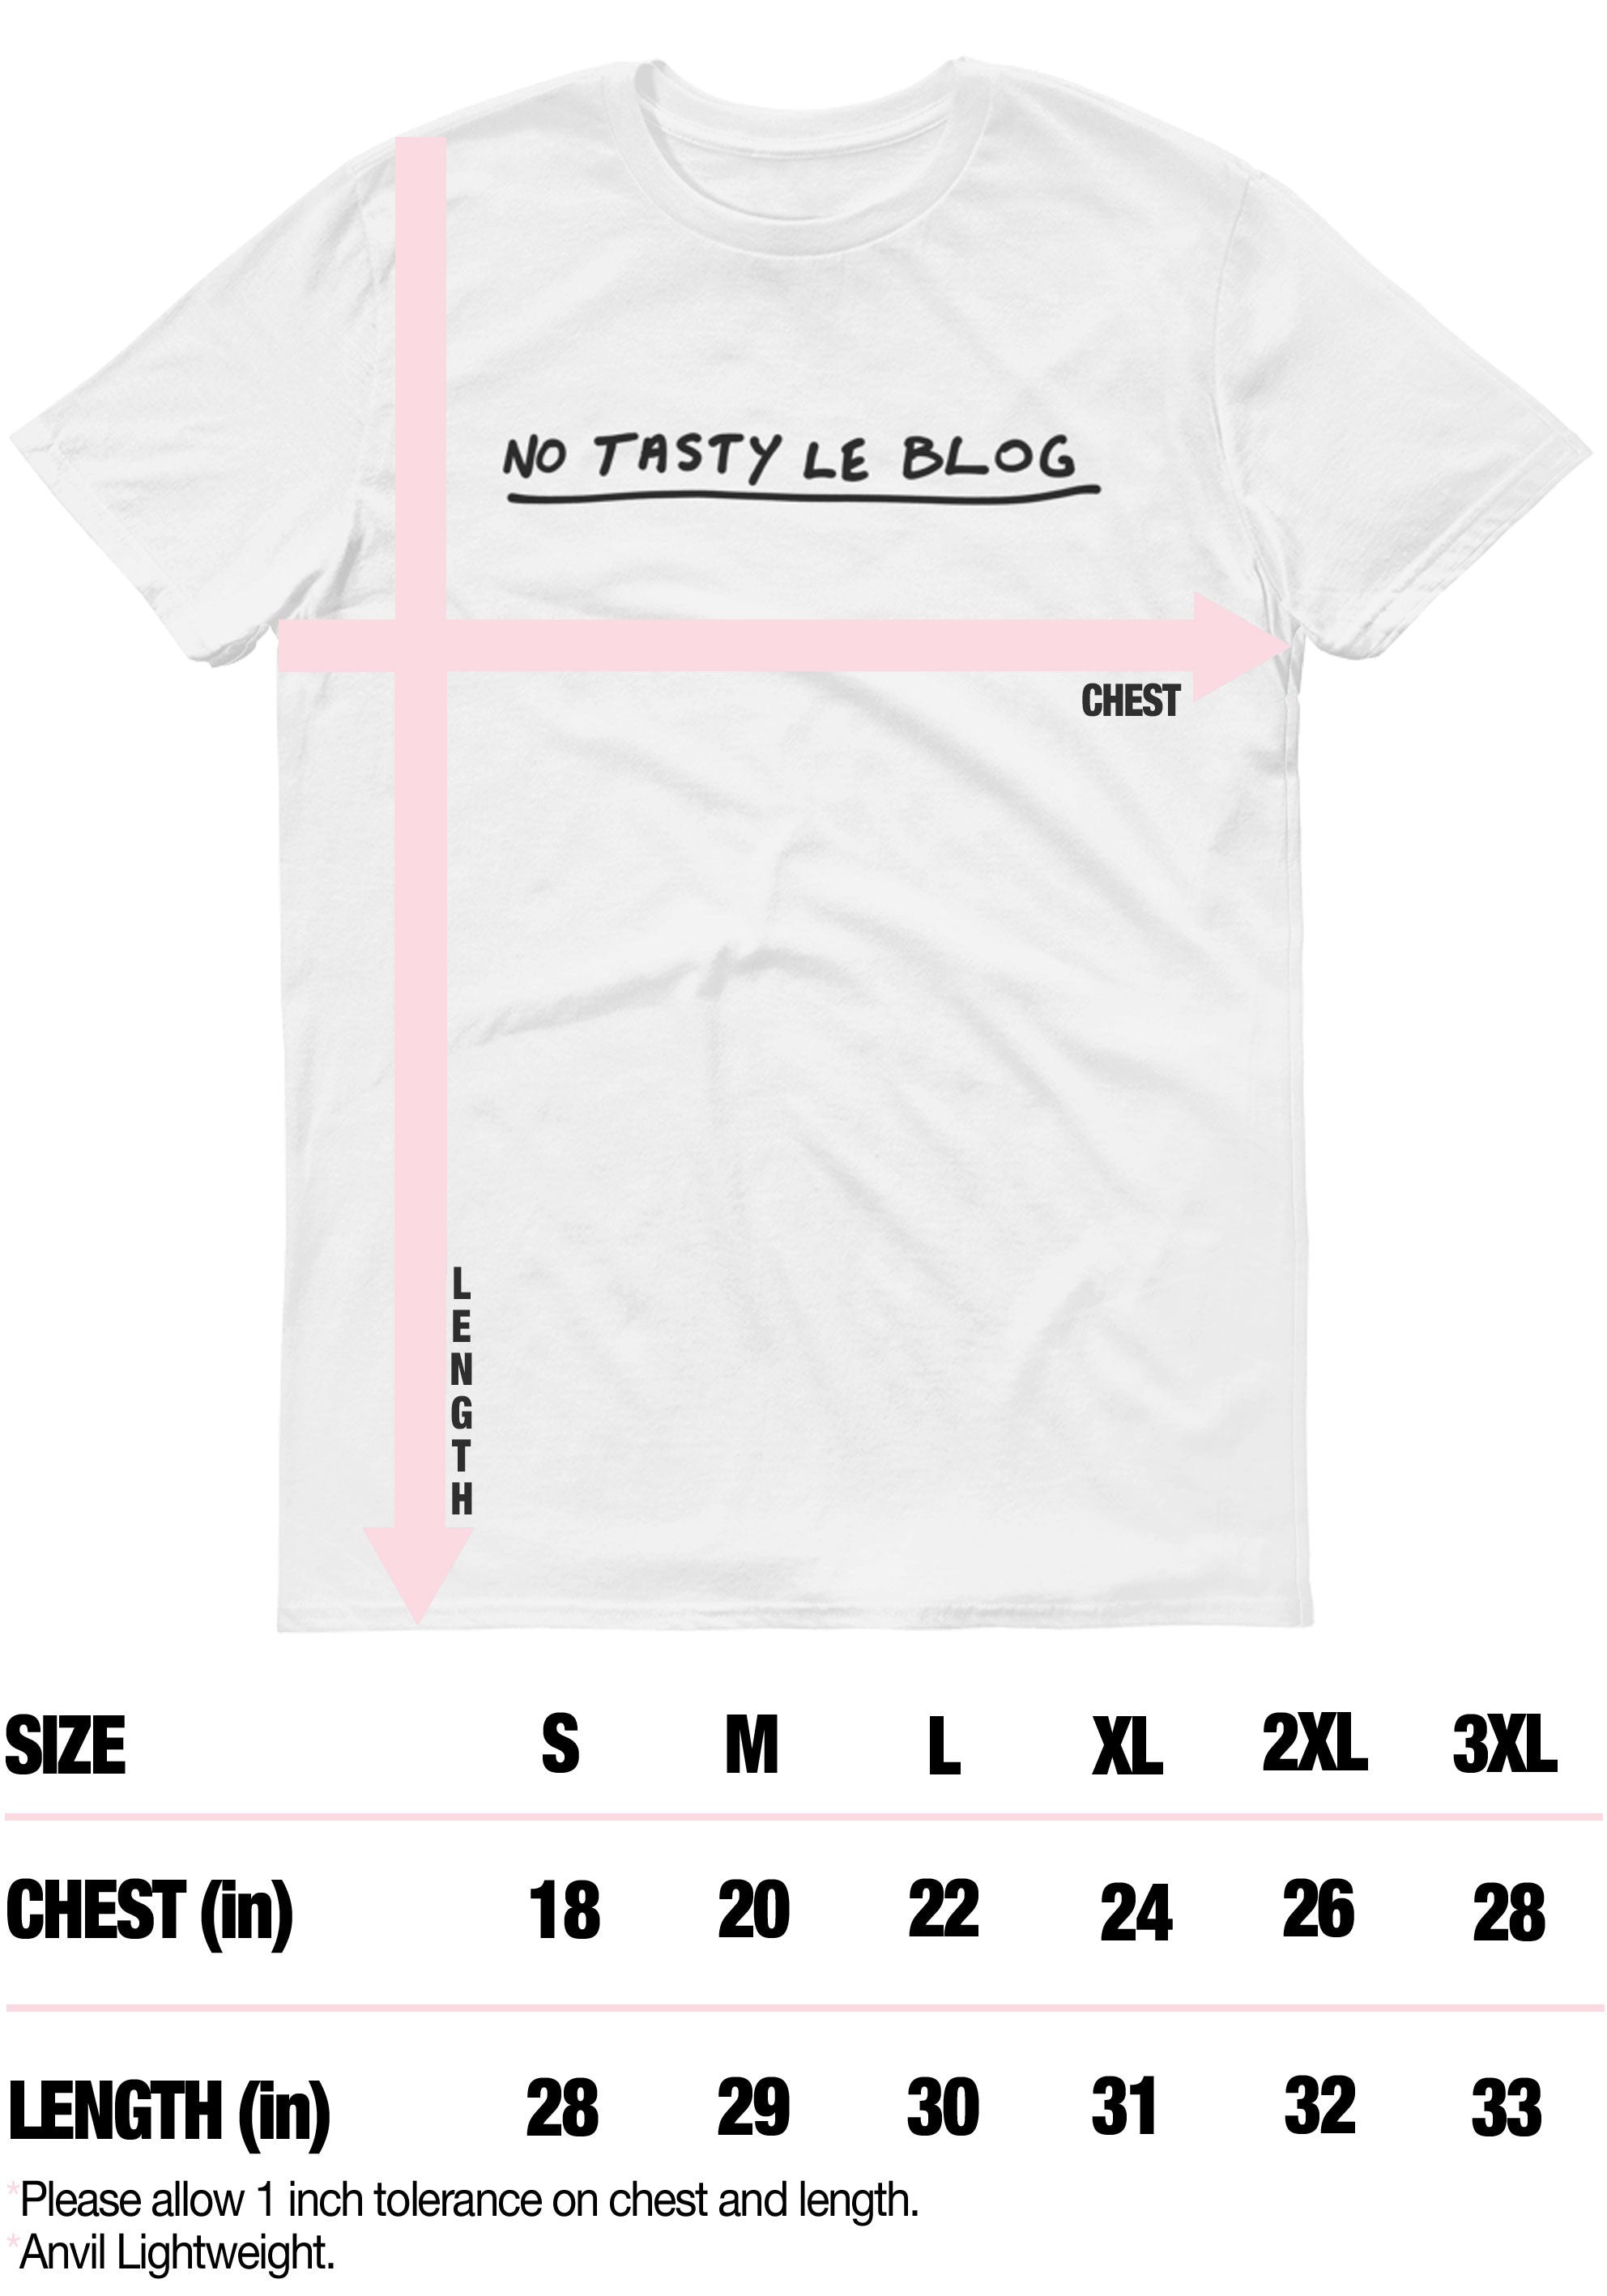 No Tasty Le Blog fashion t shirt sizing chart